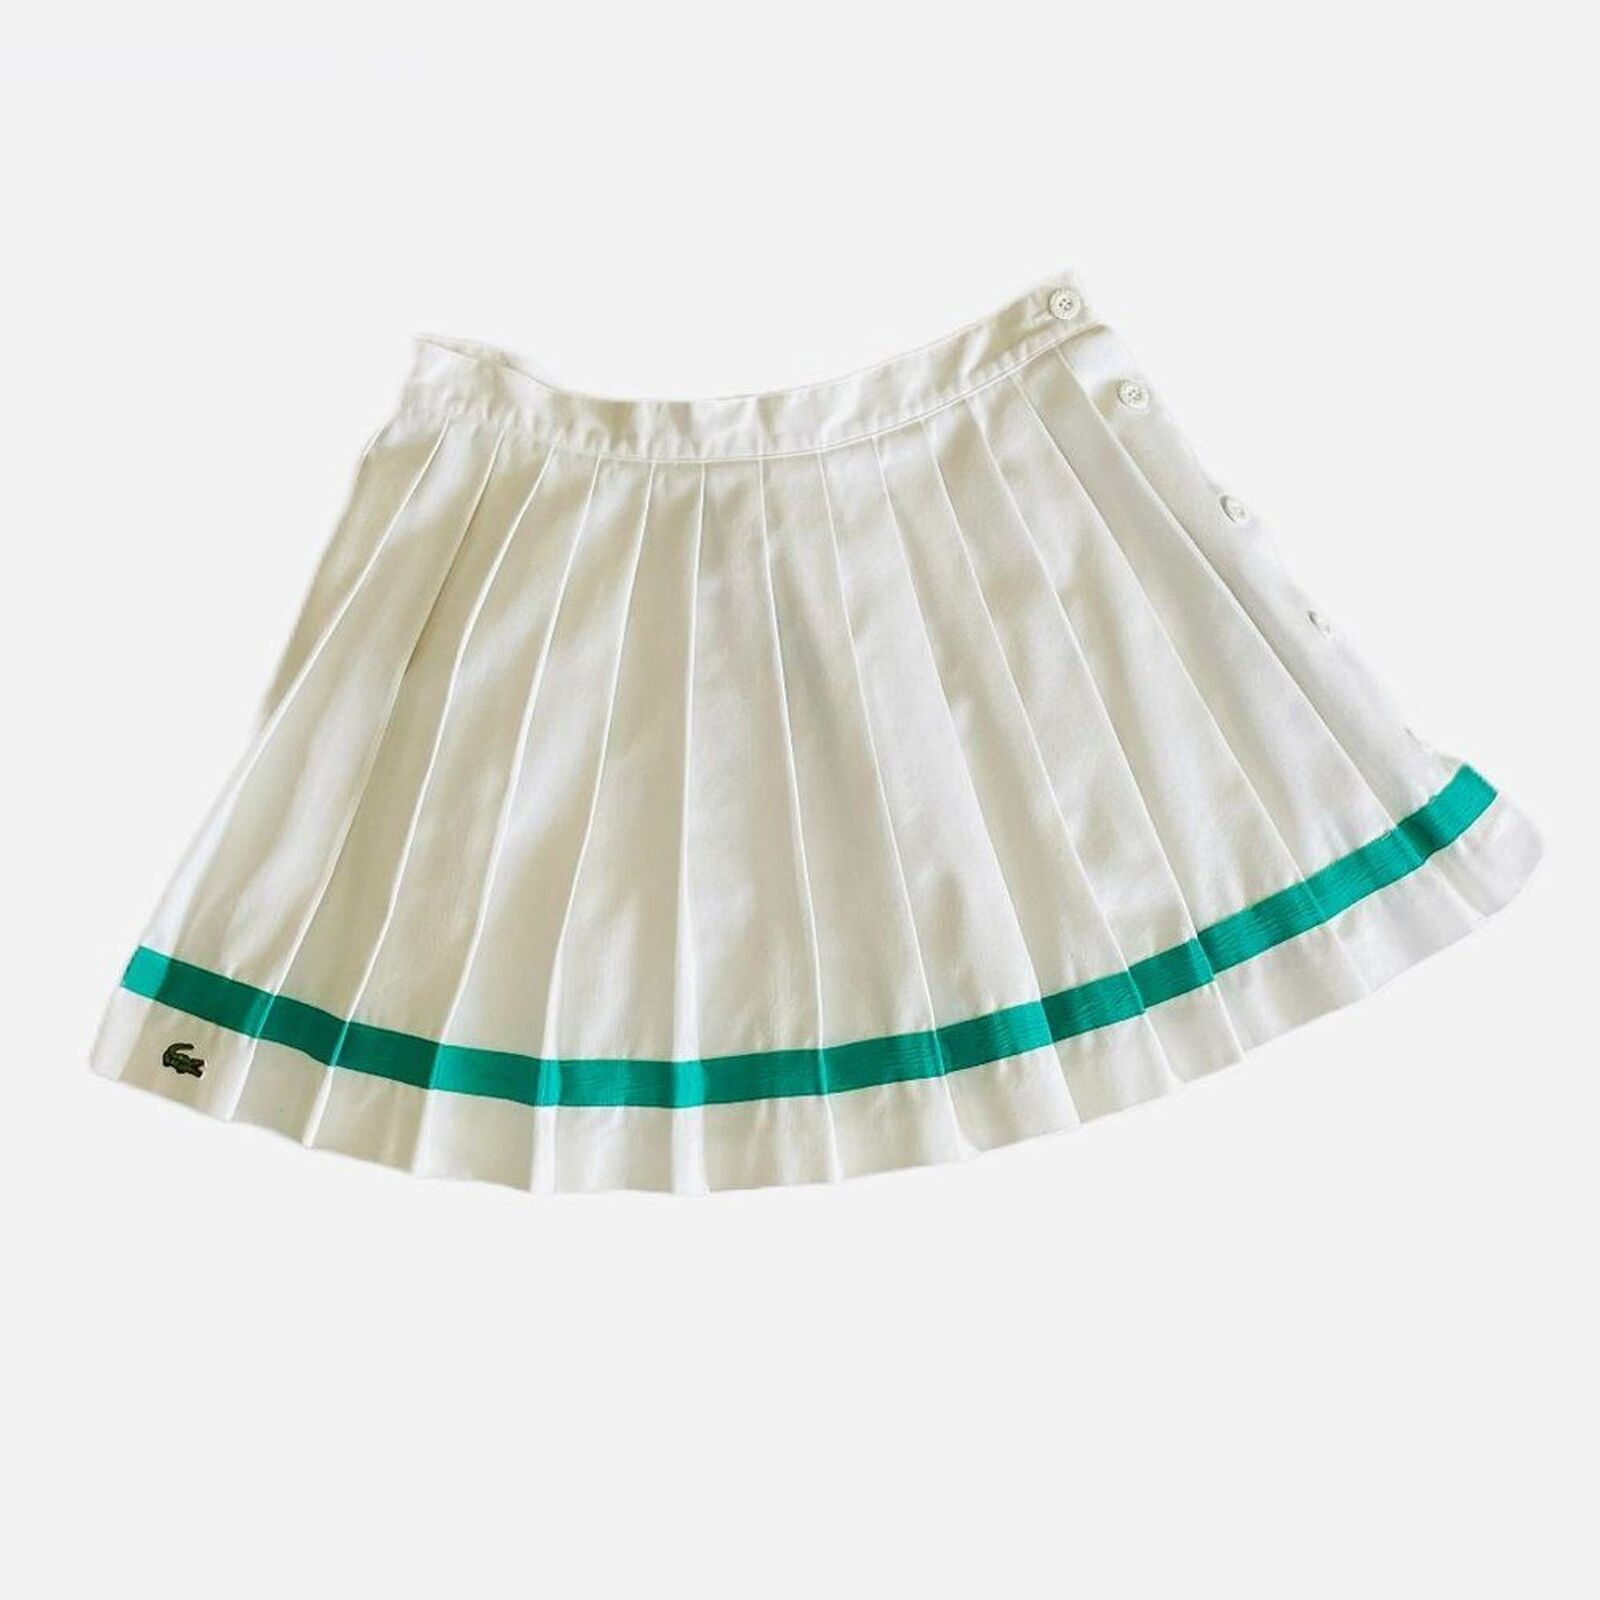 Vintage Lacoste Izod Pleated White Tennis Skirt Euc – Size 12